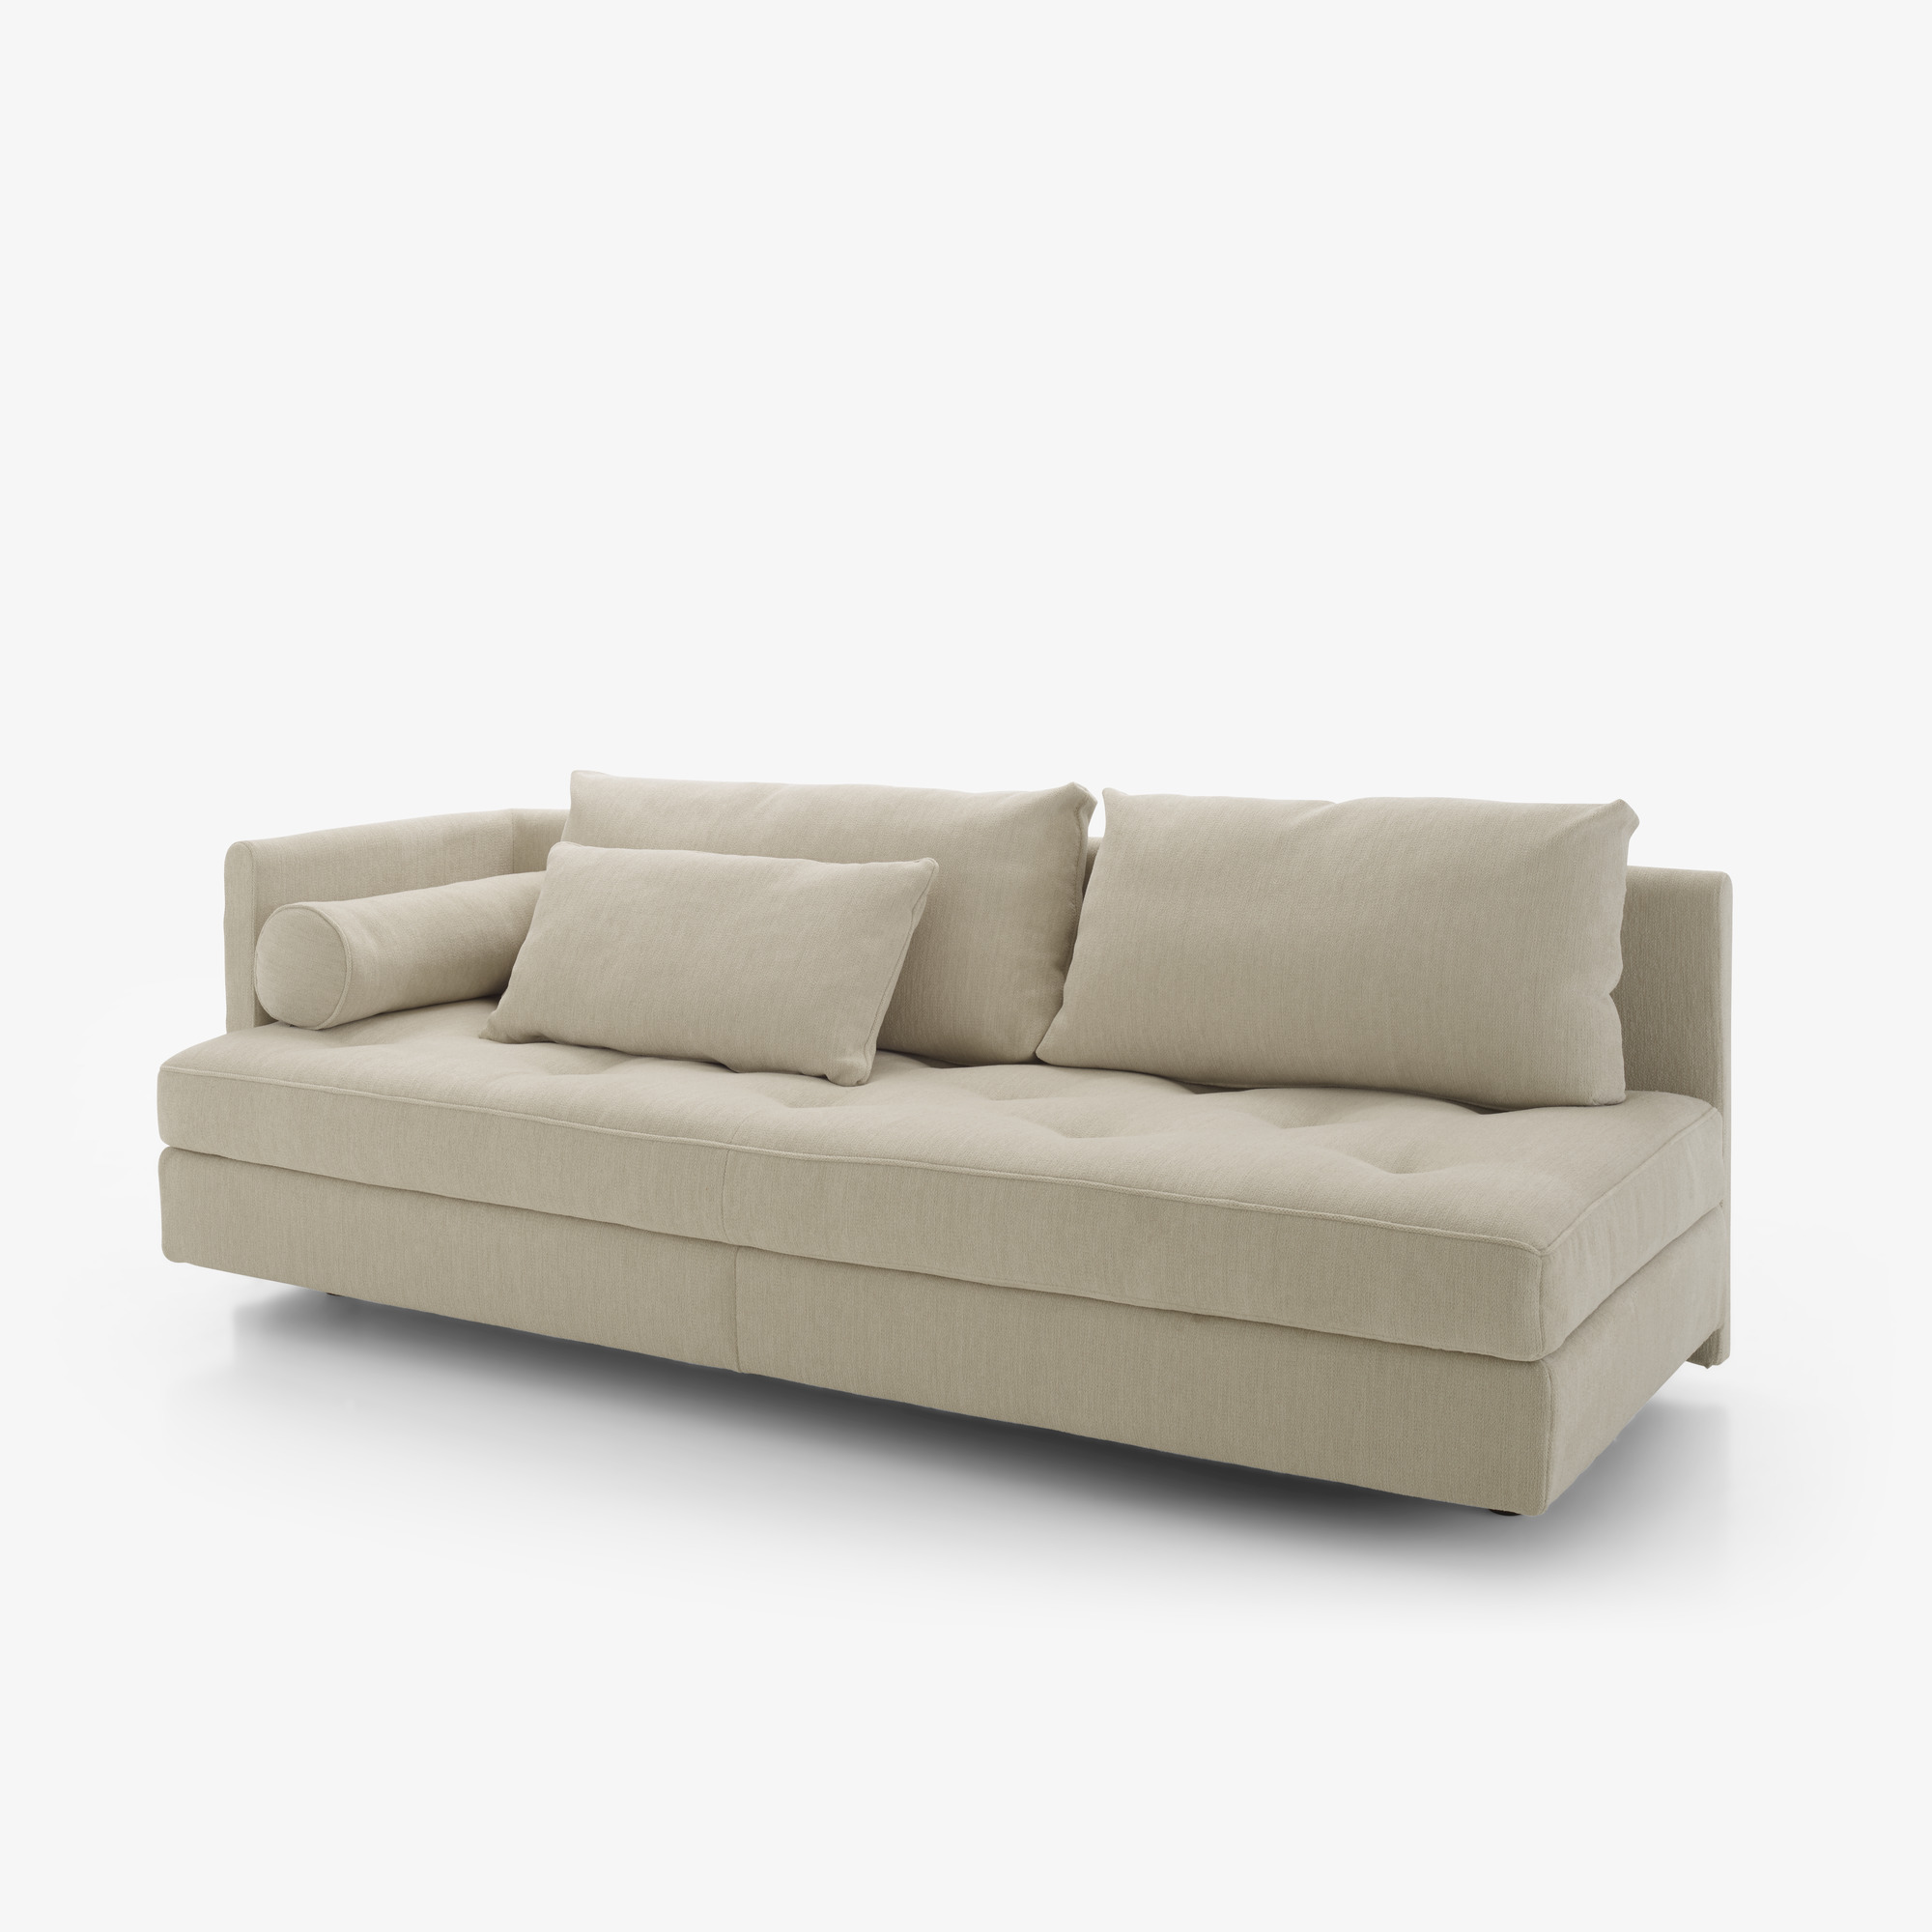 Image 1-arm sofa 3